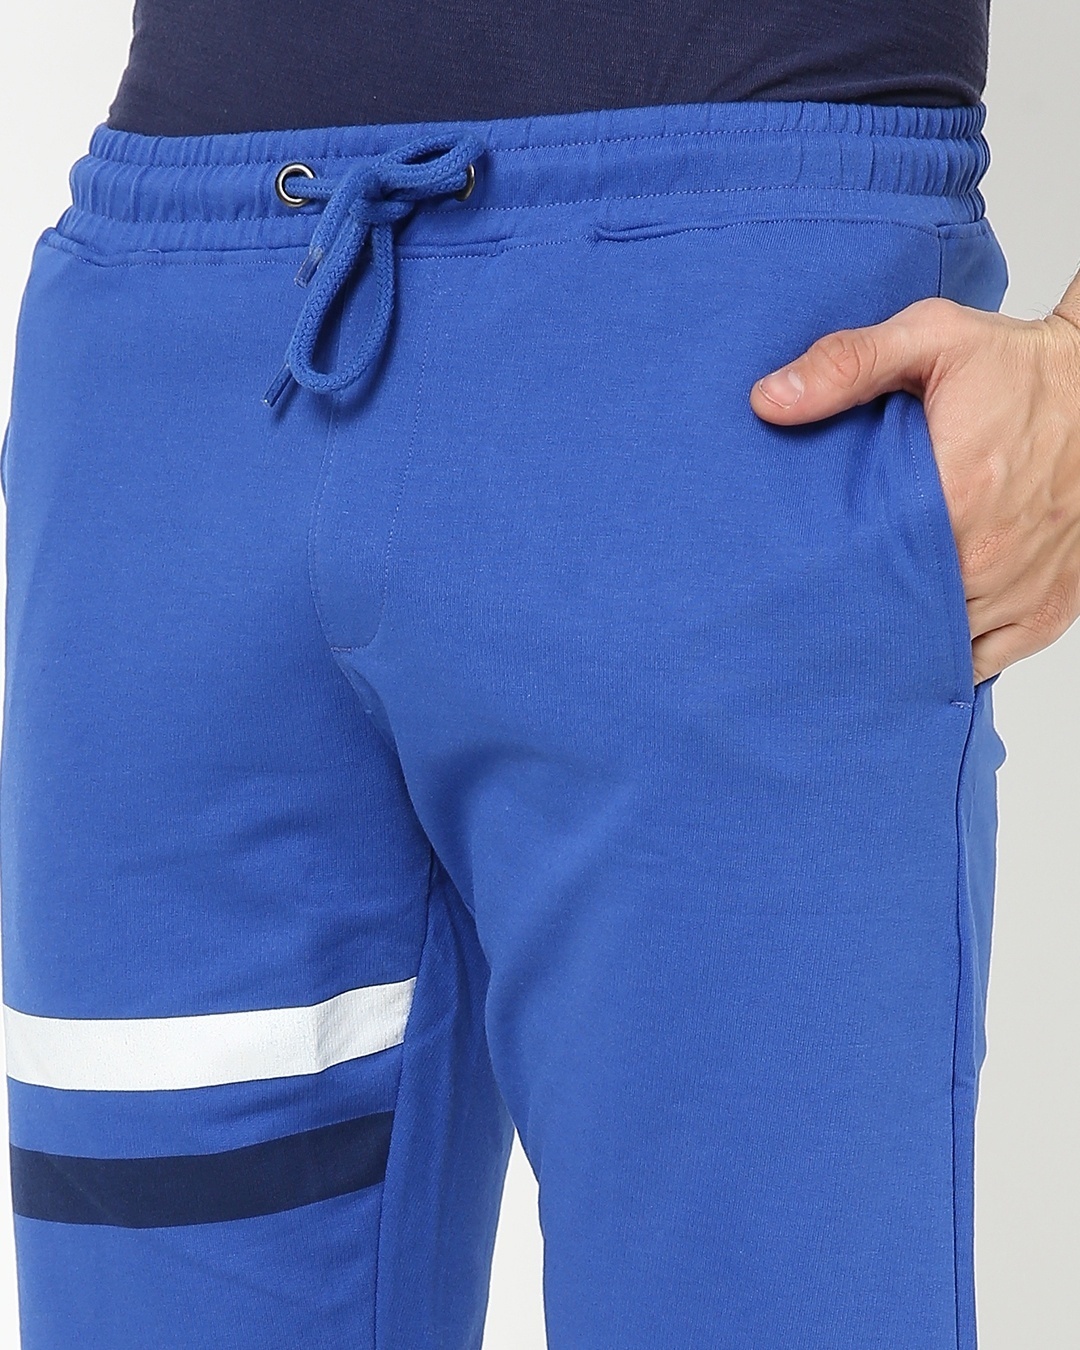 Shop Dazzling Blue Men's Solid One Side Printed Strip Shorts